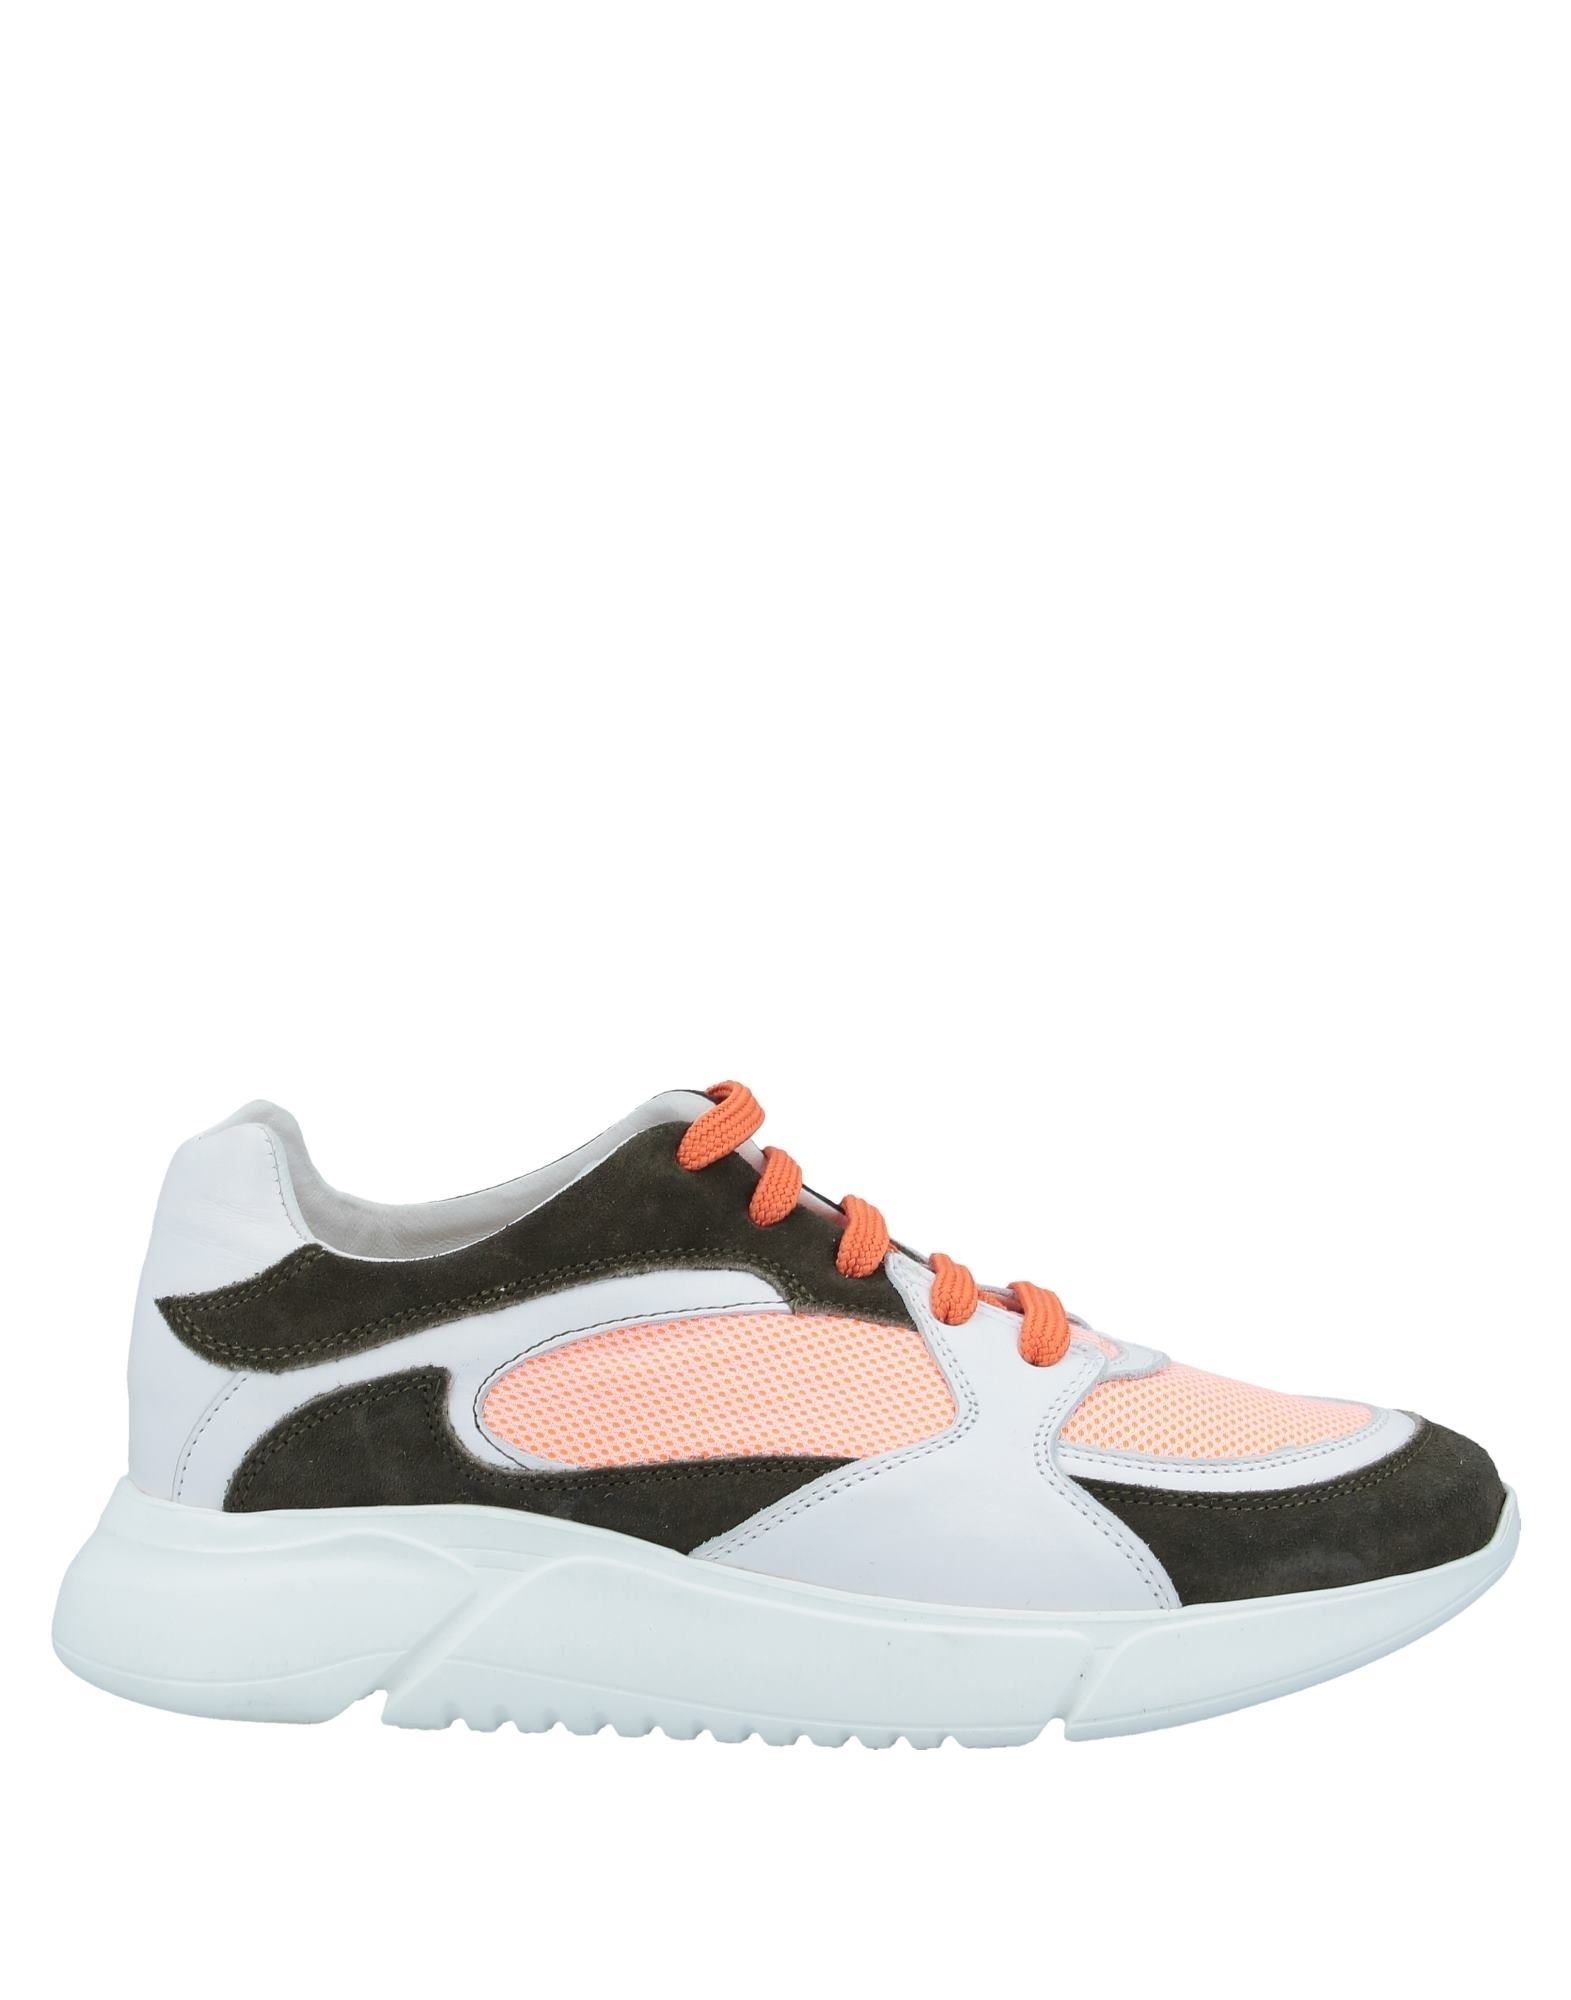 GOOSECRAFT Sneakers Damen Orange von GOOSECRAFT